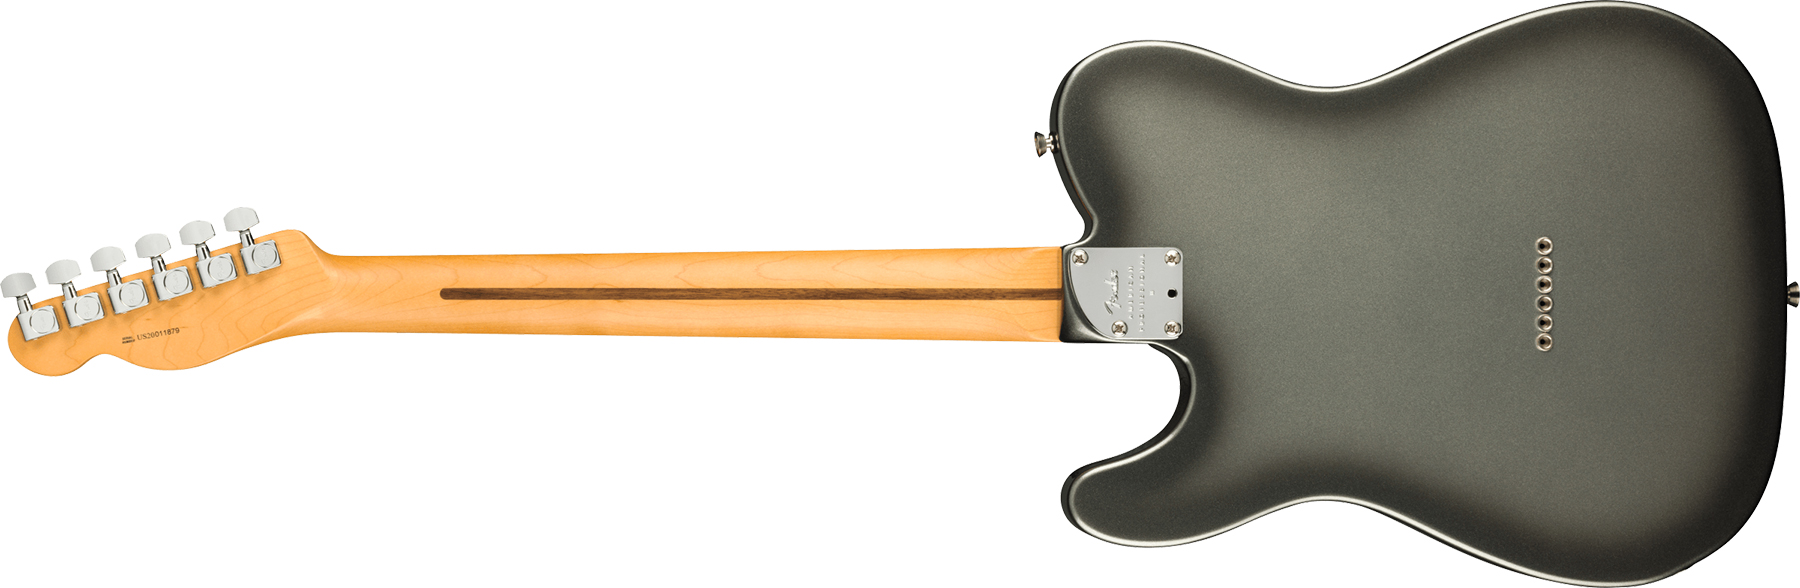 Fender Tele American Professional Ii Usa Rw - Mercury - Tel shape electric guitar - Variation 1